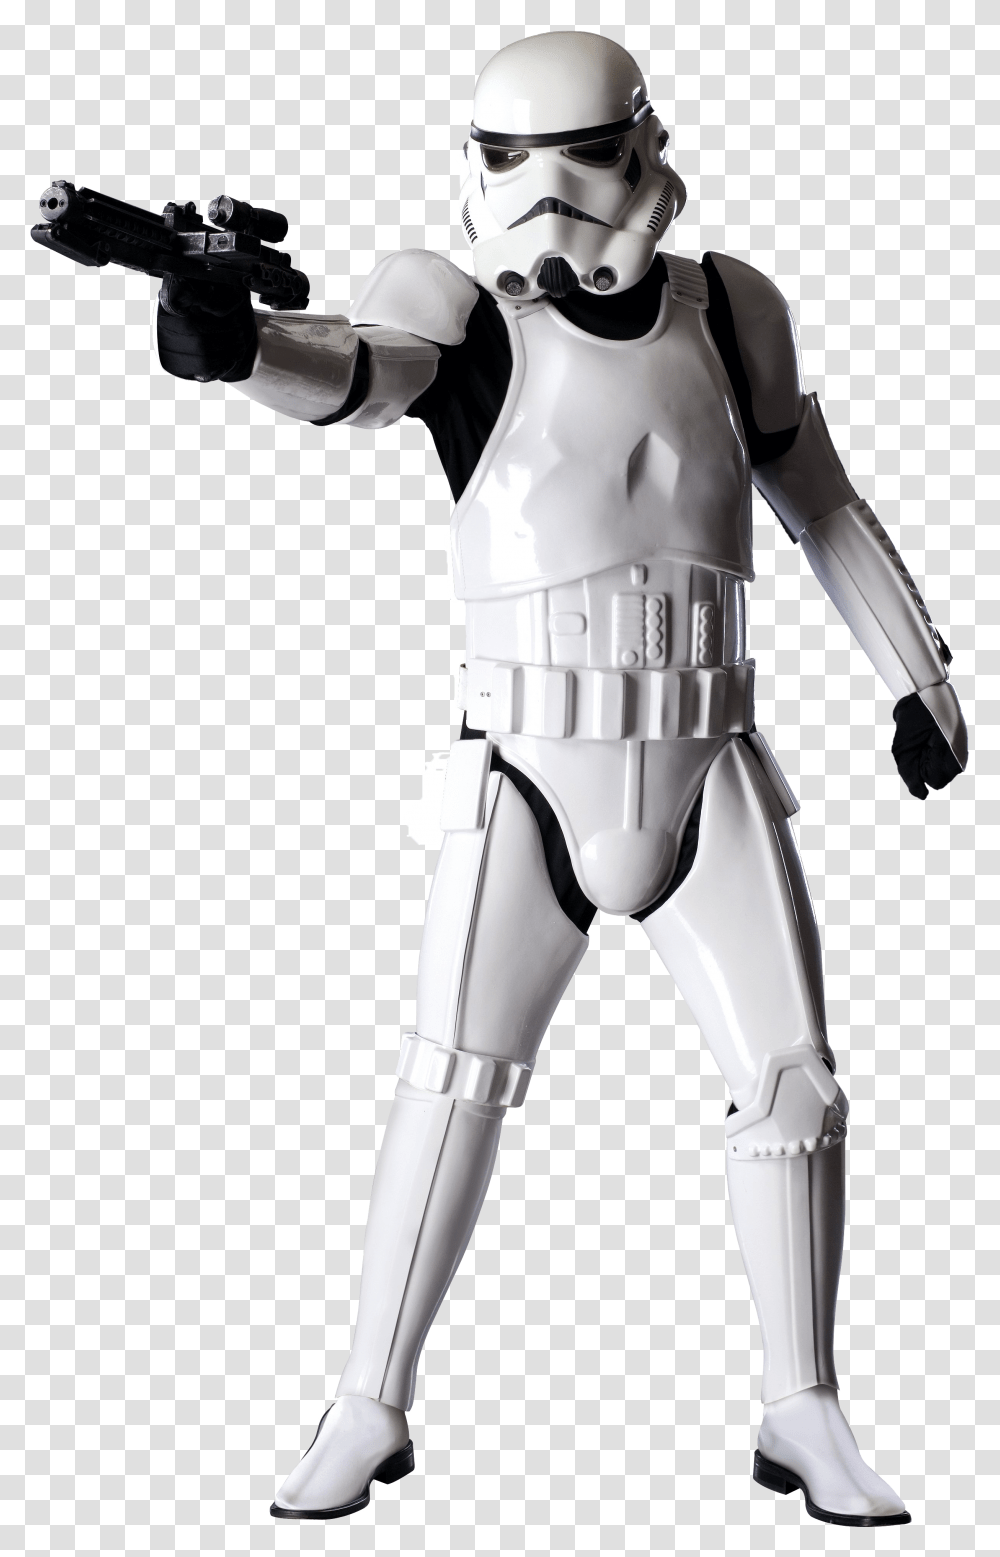 Download Star Wars Stormtrooper Star Wars Stormtrooper Costume, Robot, Helmet, Clothing, Apparel Transparent Png